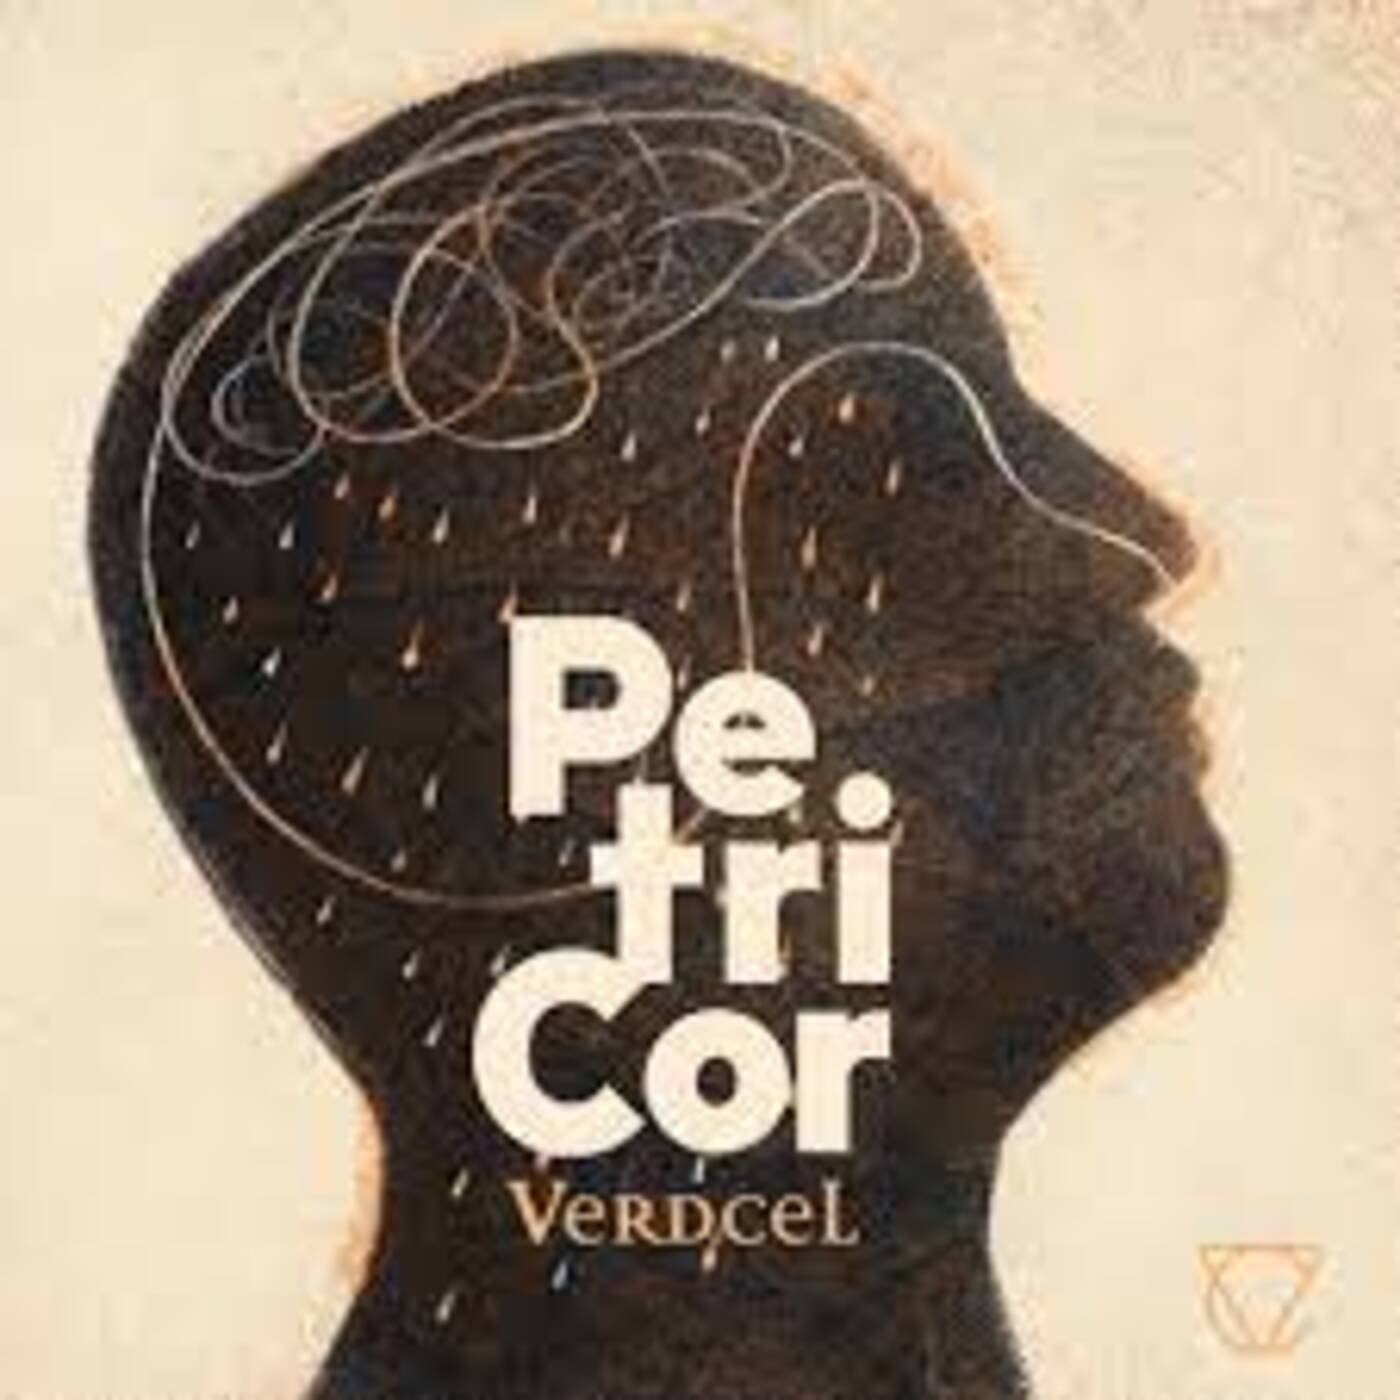 Verdcel - Petricor | musica en valencià